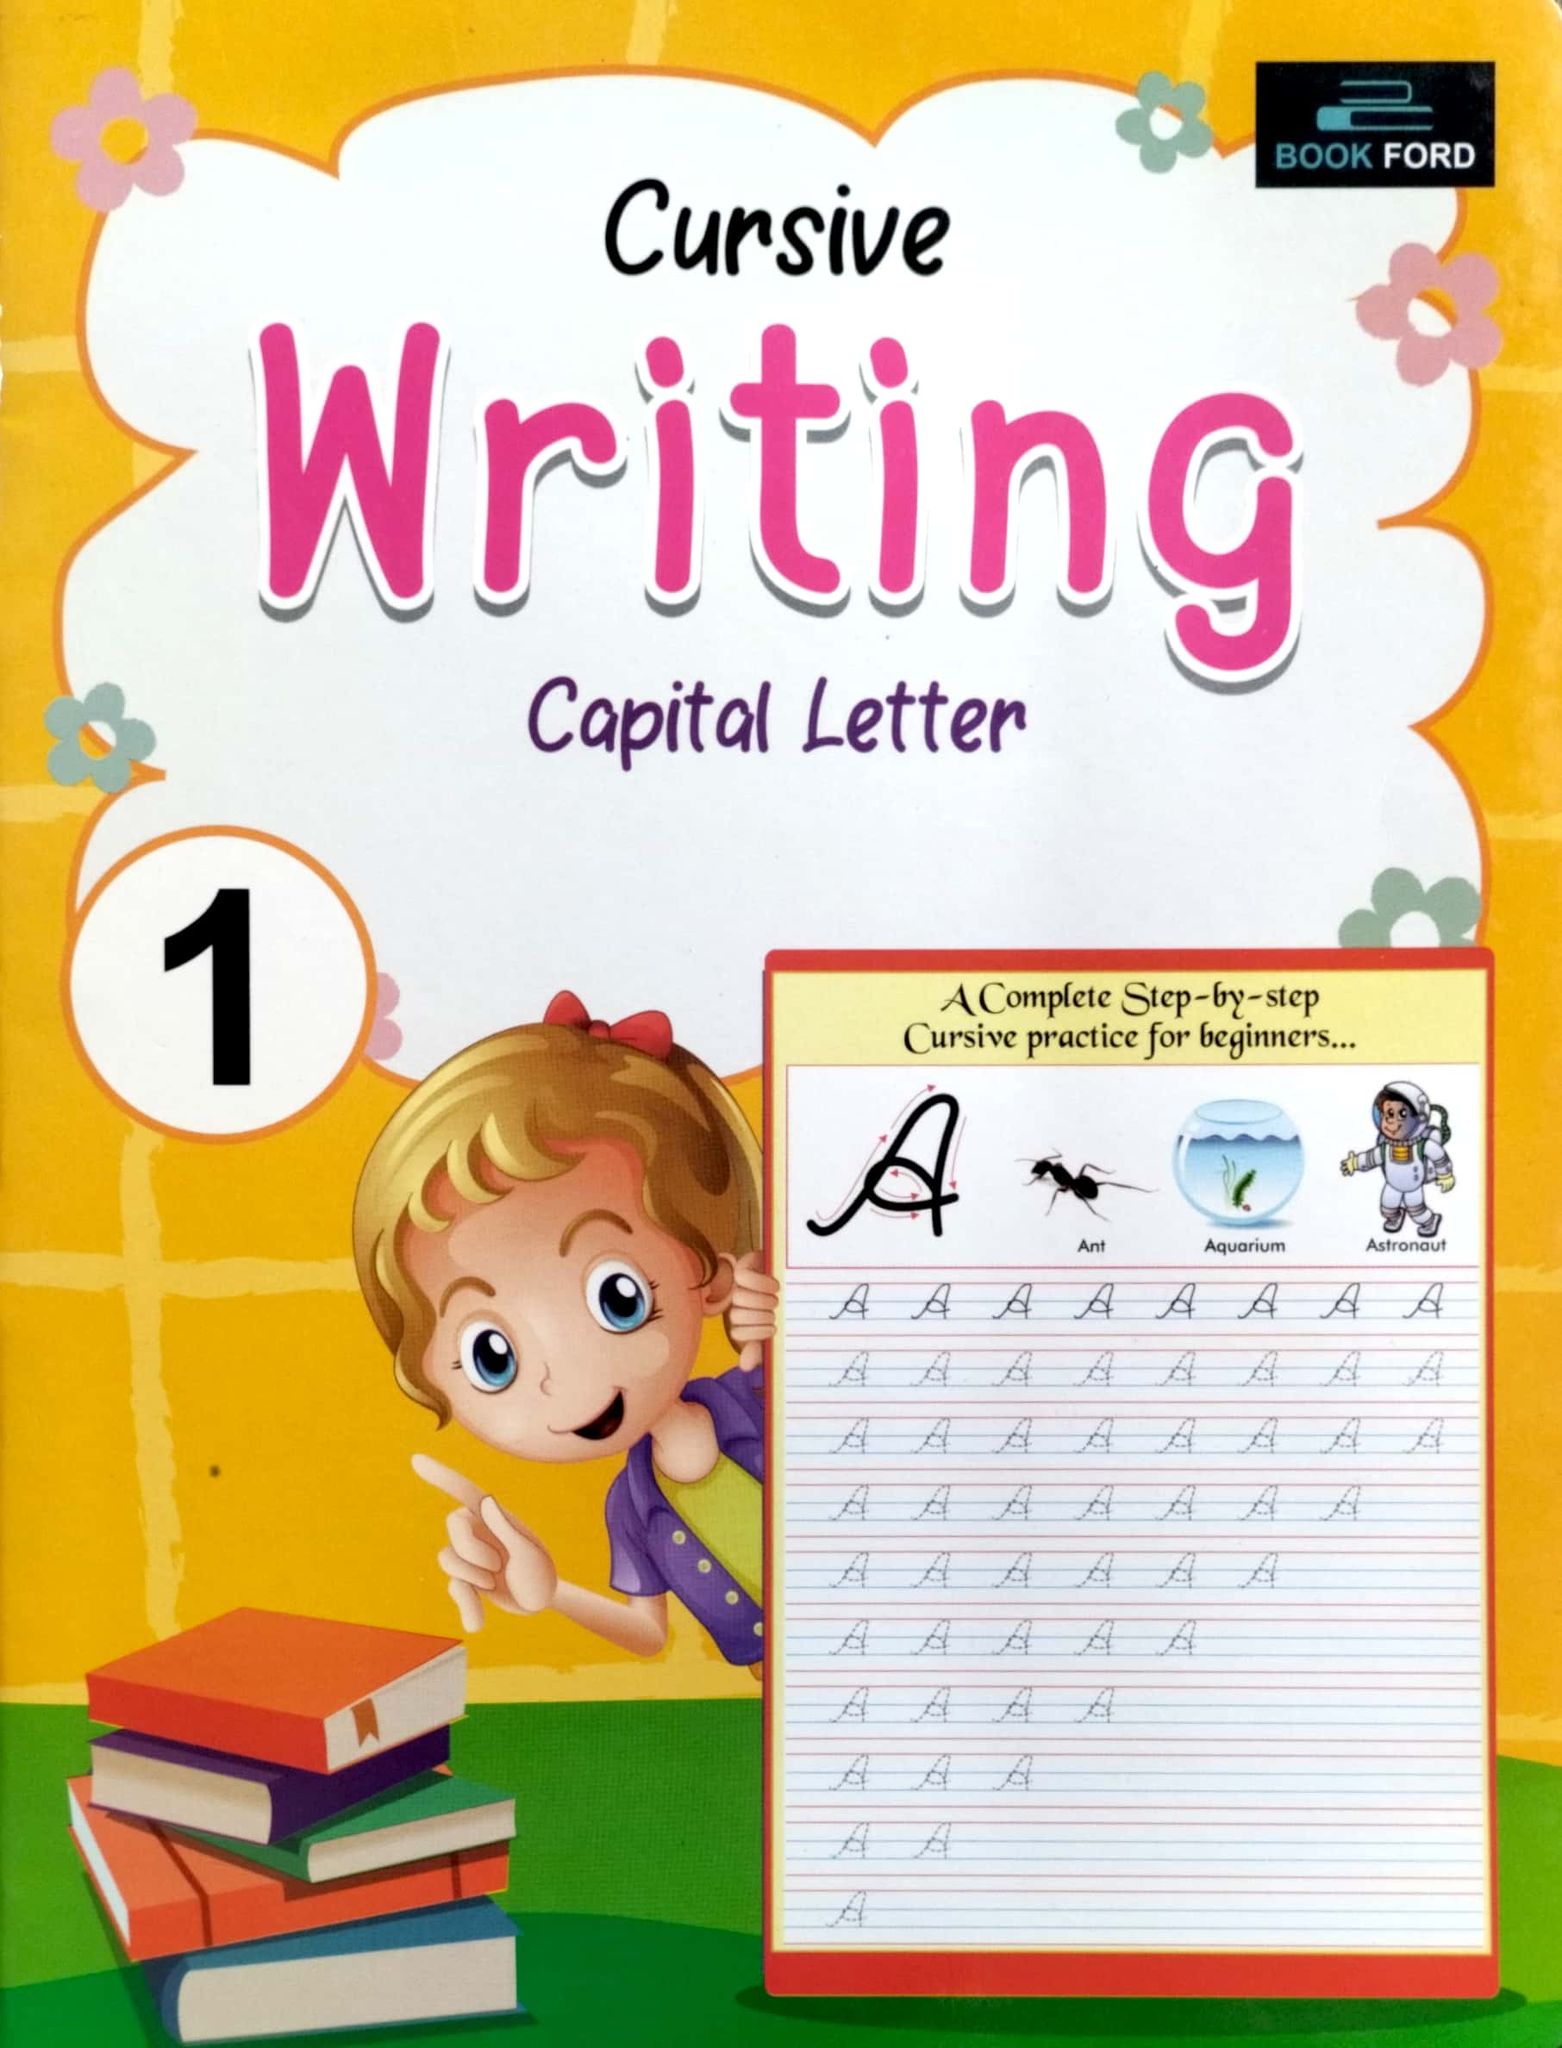 Cursive Writing Capital Letter (পেপারব্যাক)